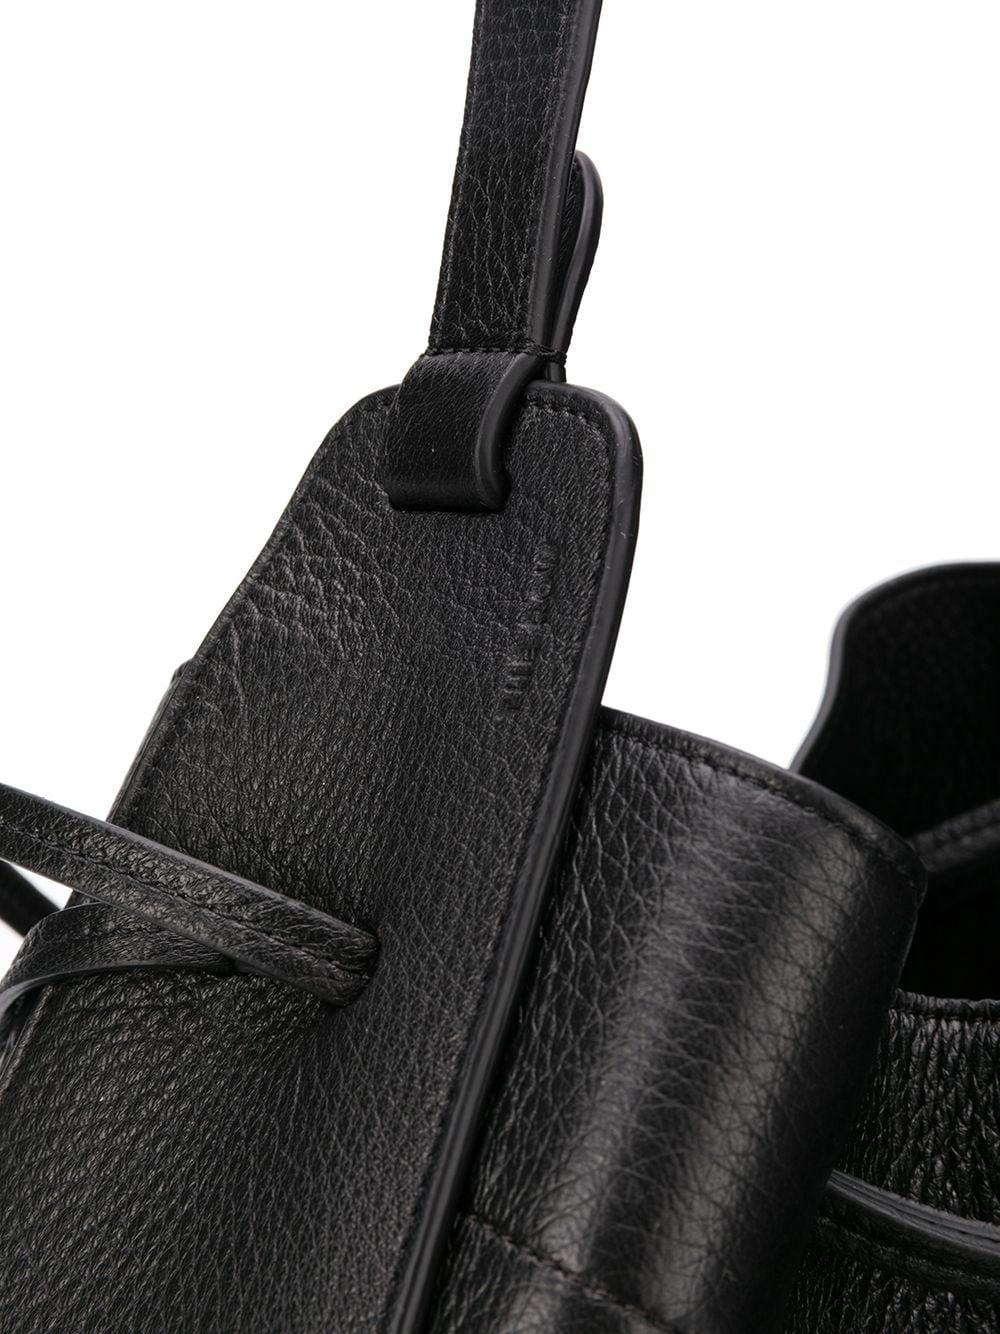 The Row Xl Drawstring Hobo Bag in Black | Lyst